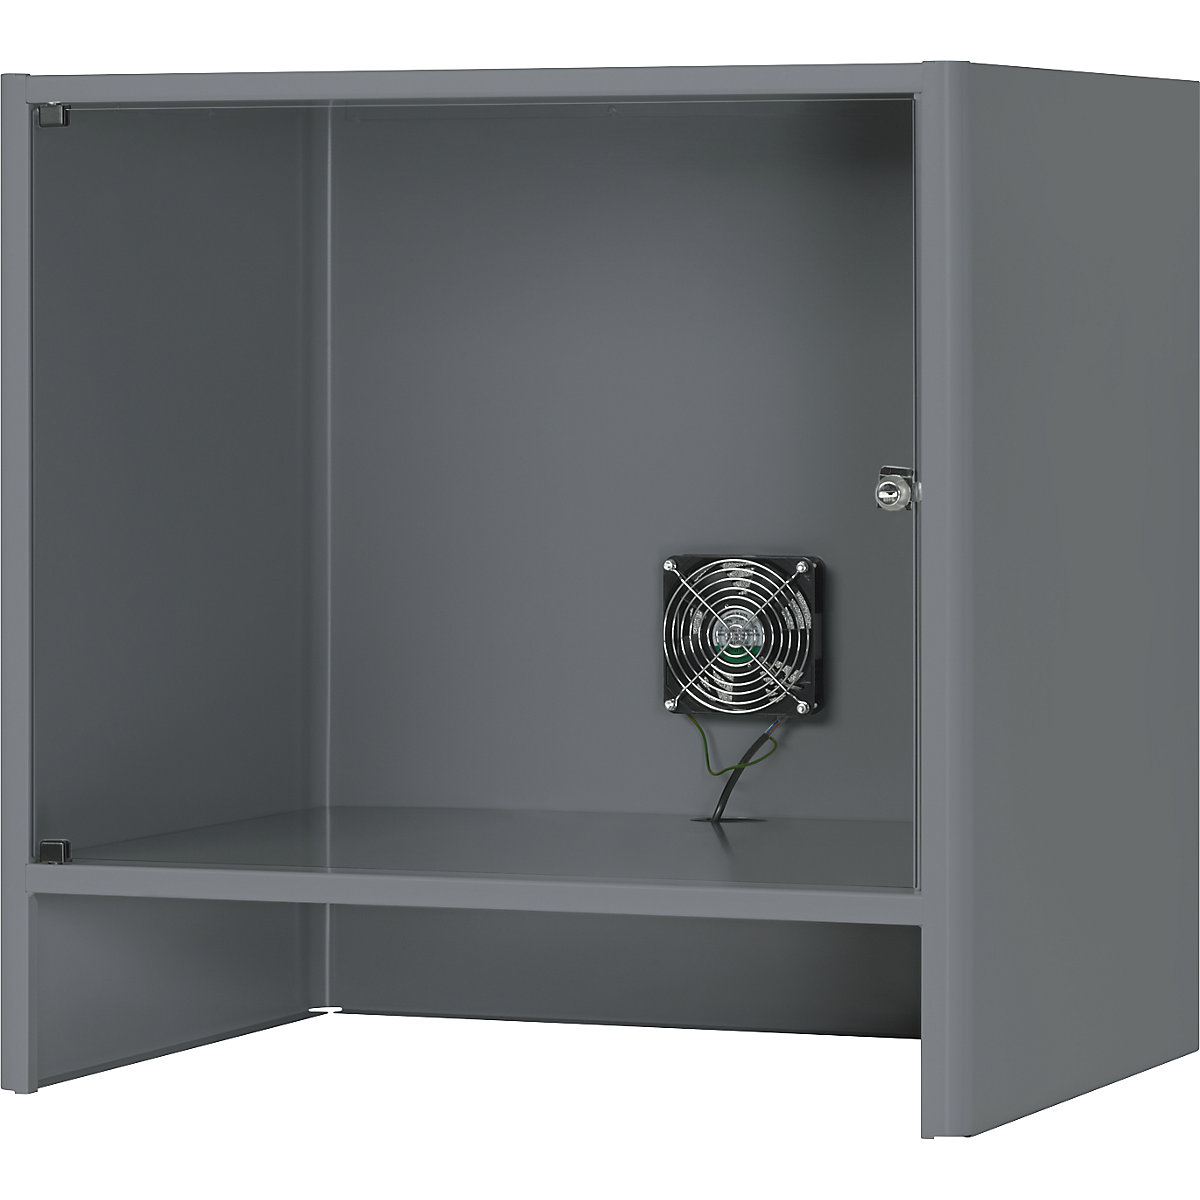 RAU – Monitor housing with integrated ventilation fan, HxWxD 710 x 720 x 550 mm, metallic charcoal